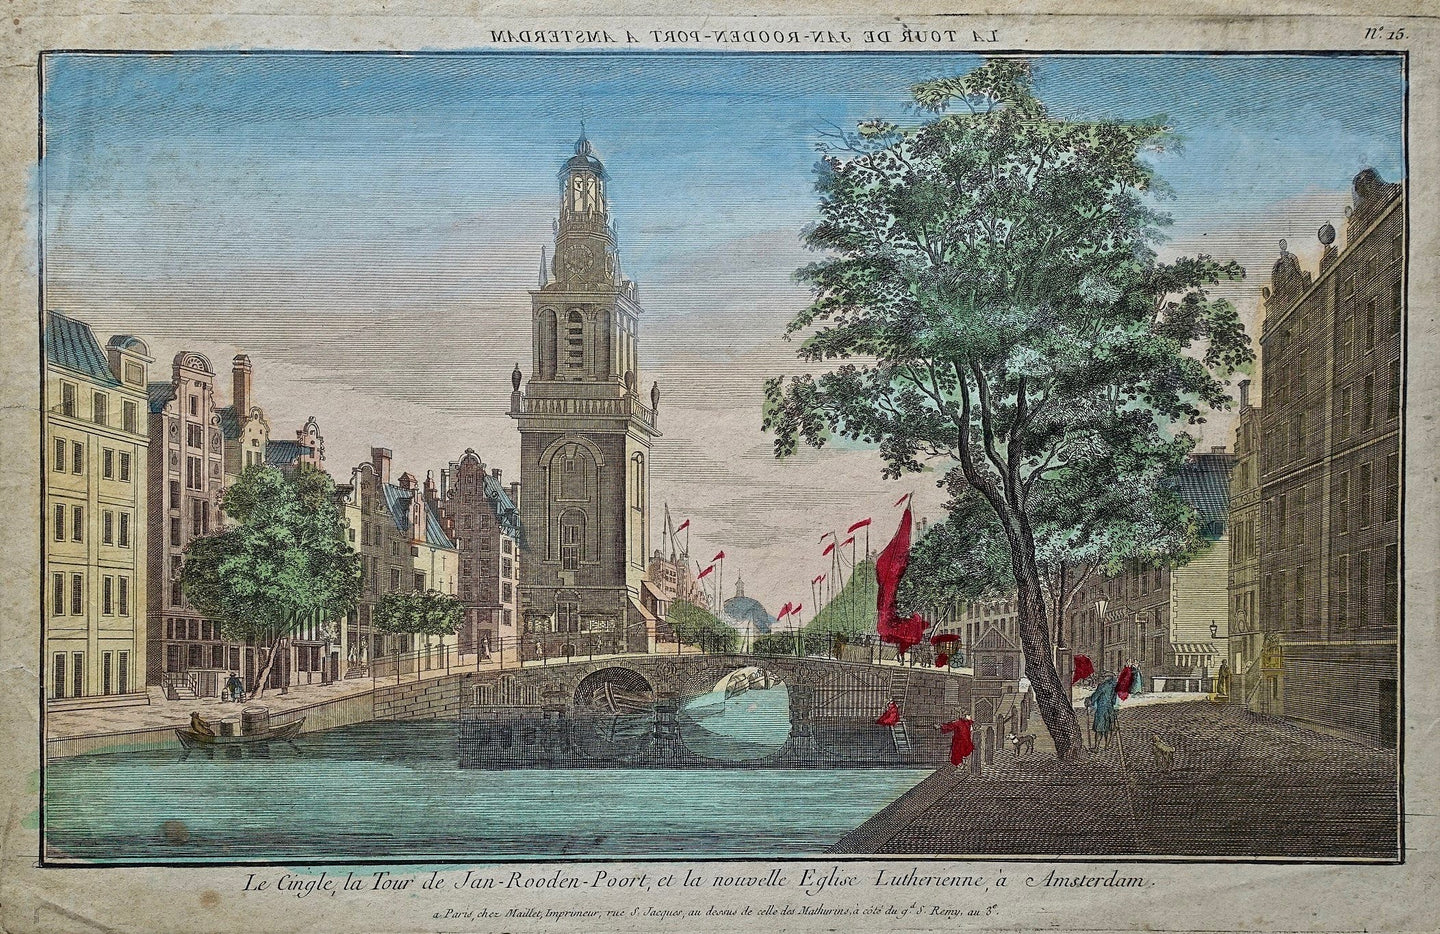 Amsterdam Singel Jan Rodenpoortstoren - Maillet - ca. 1770